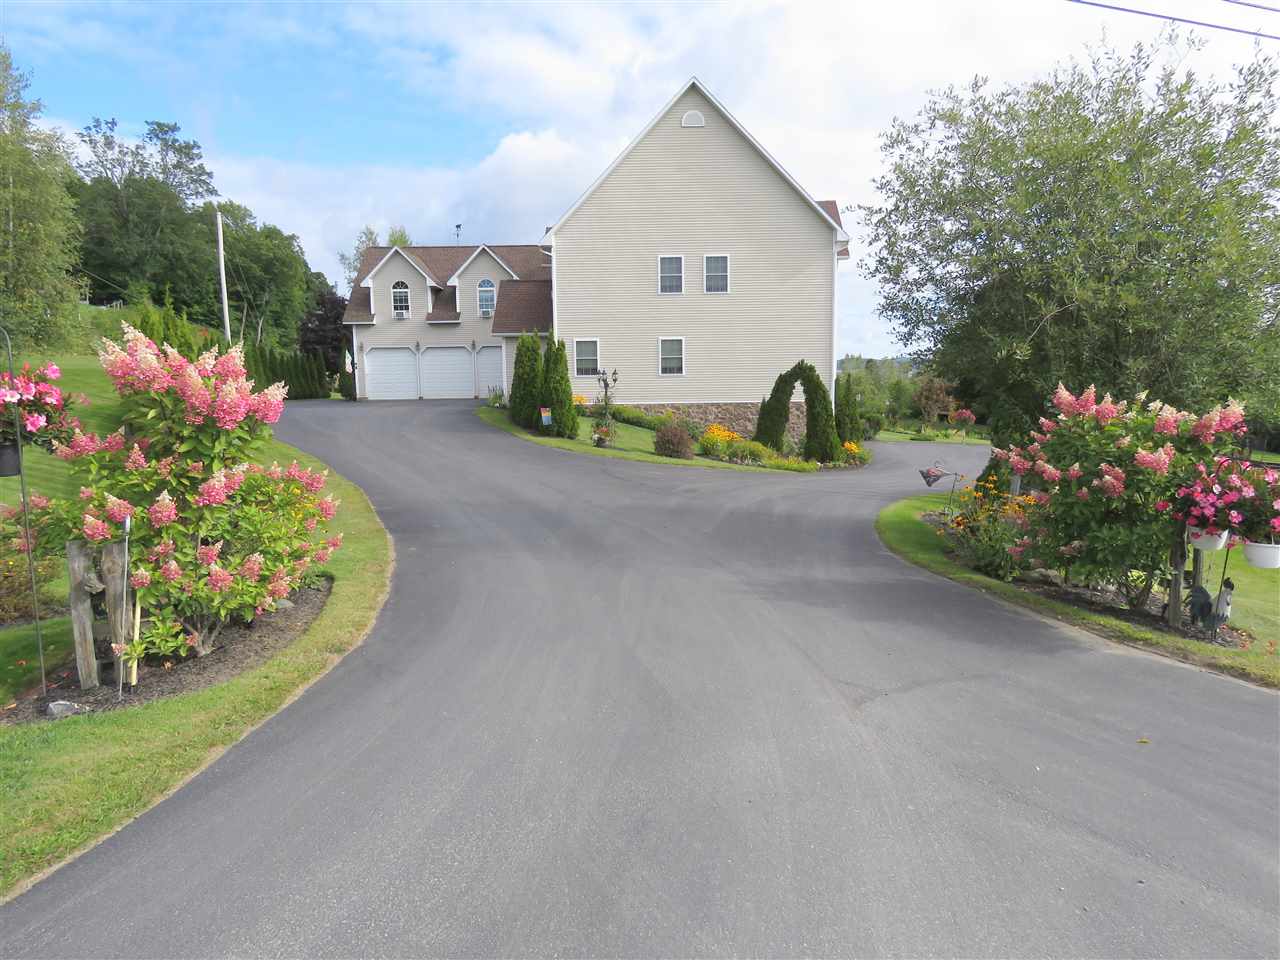 Landscaped Driveway